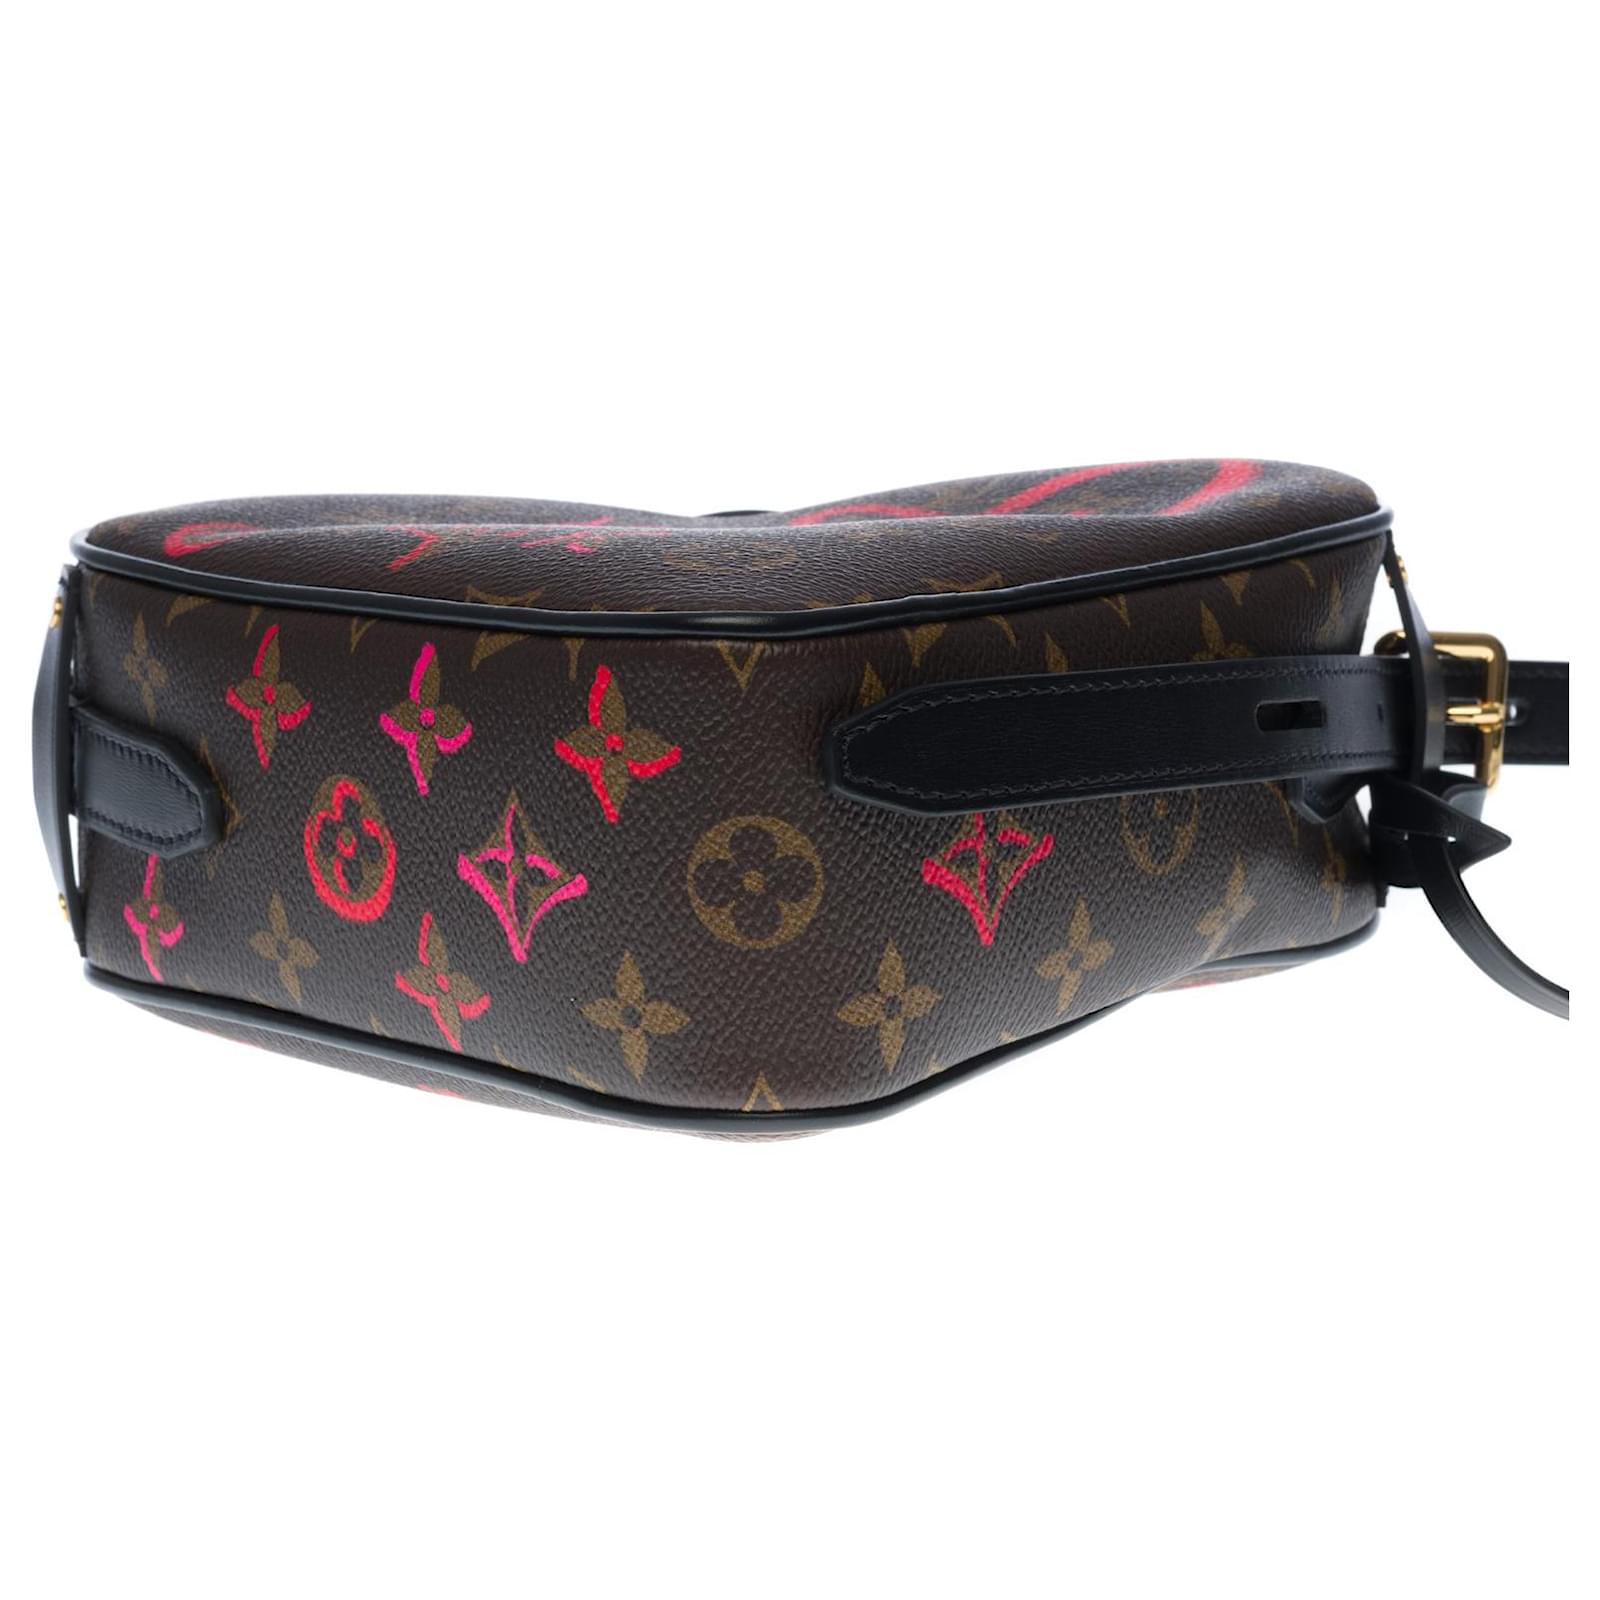 Louis Vuitton Coeur Handbag Limited Edition Fall in Love Monogram Embossed  Lambskin Pink 220202124